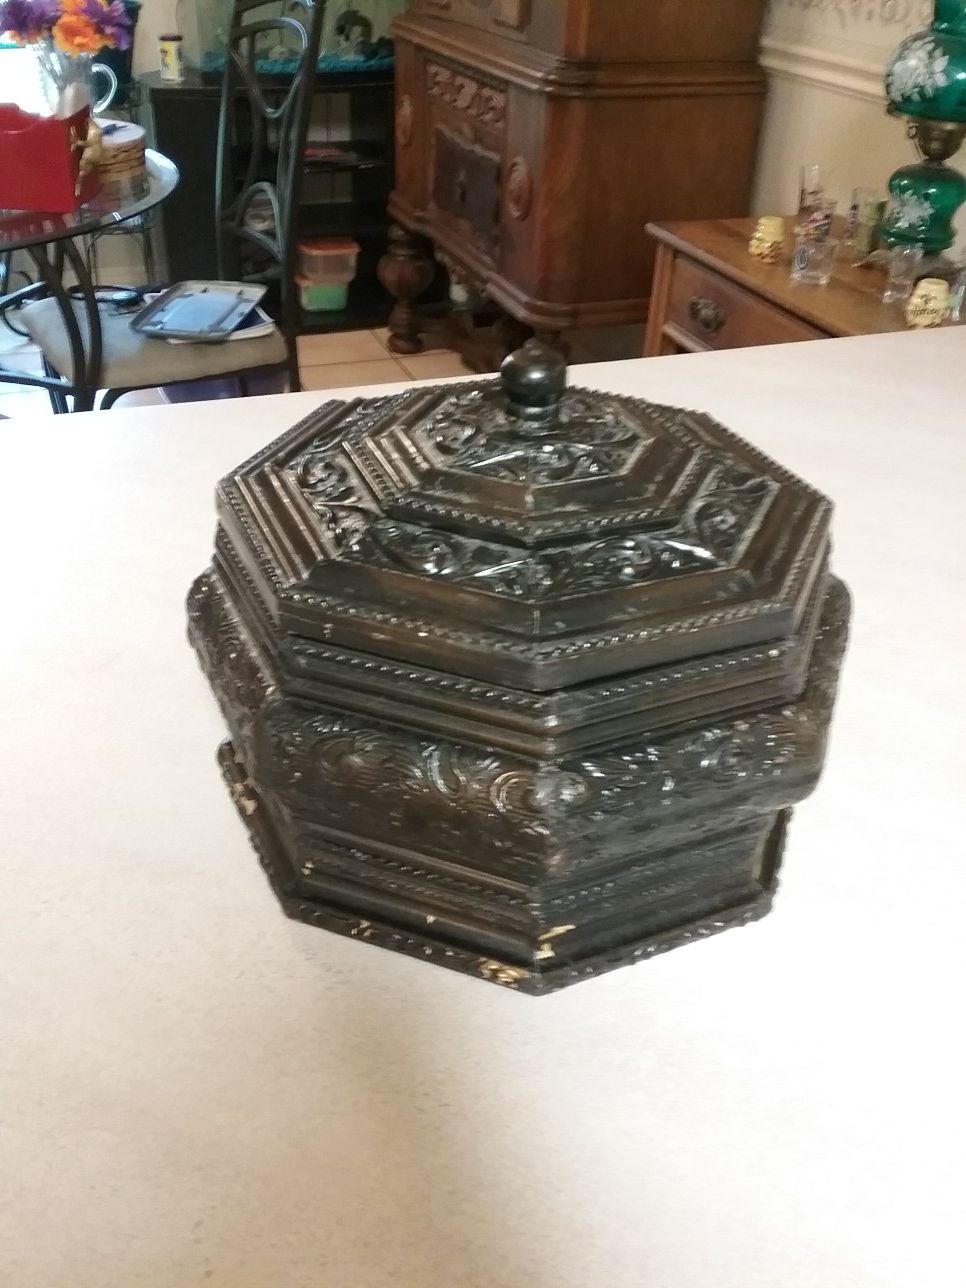 Very old octogon box